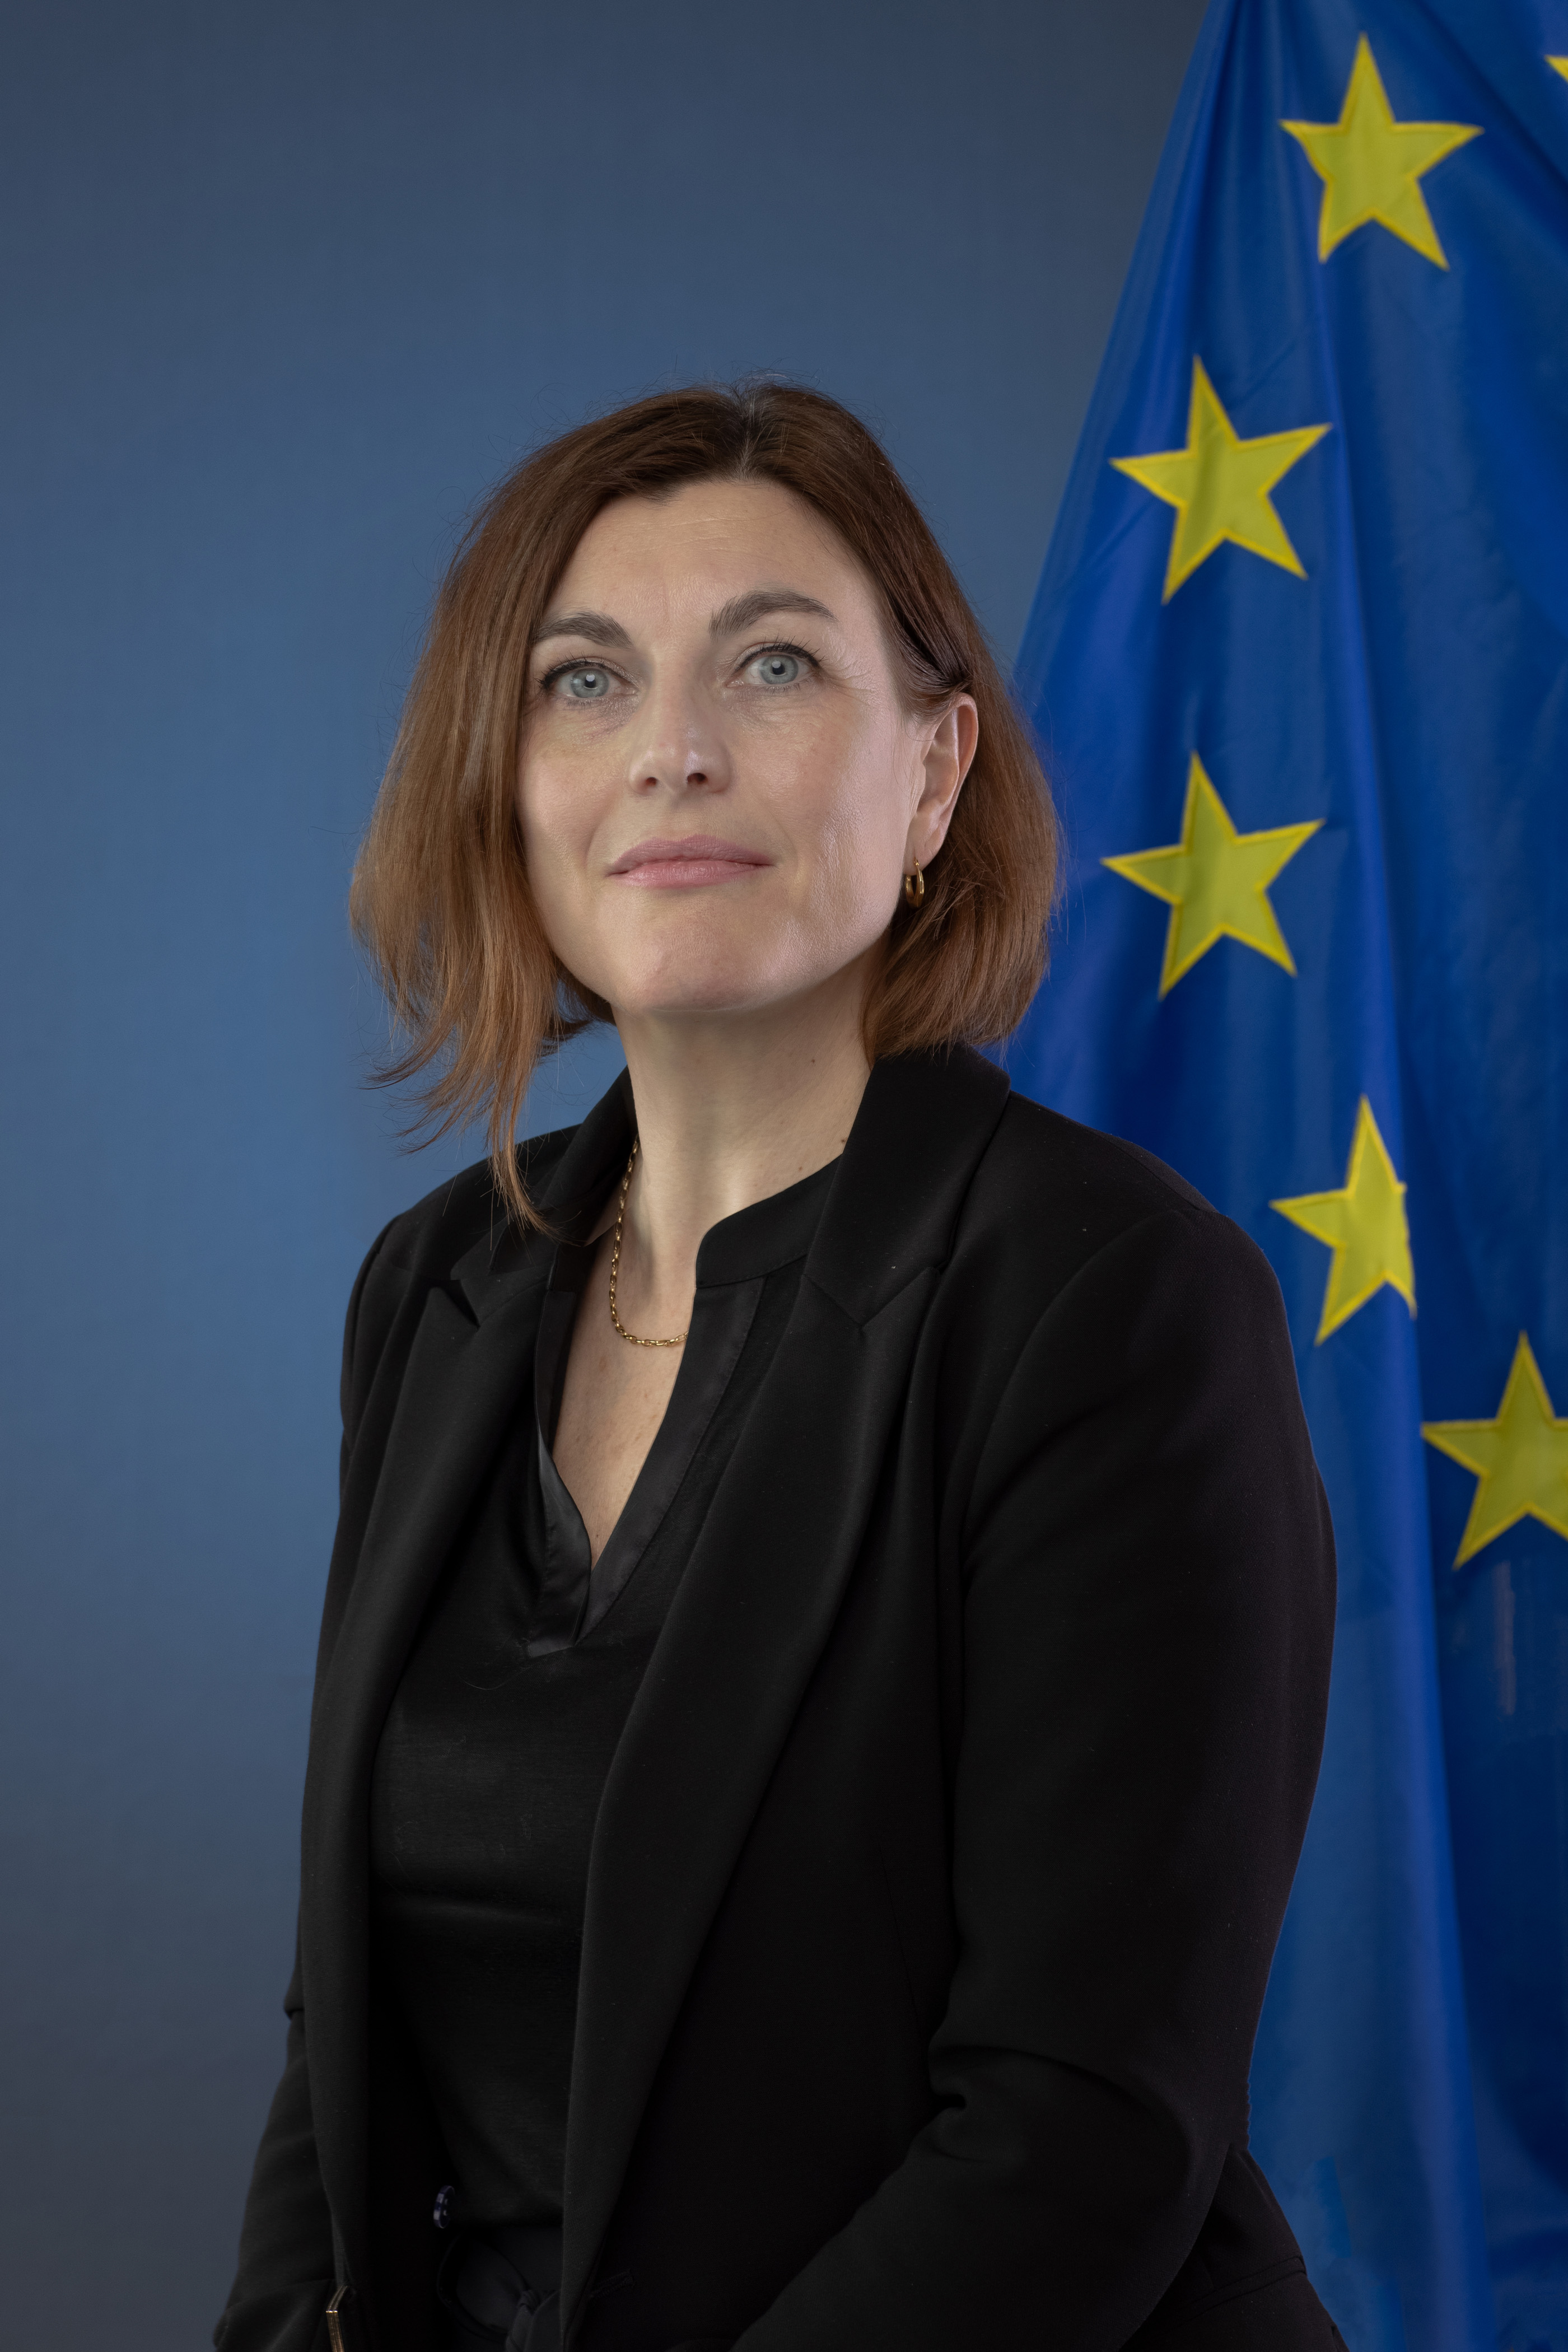 Photograph of European Prosecutor for The Netherlands Danielle Goudriaan